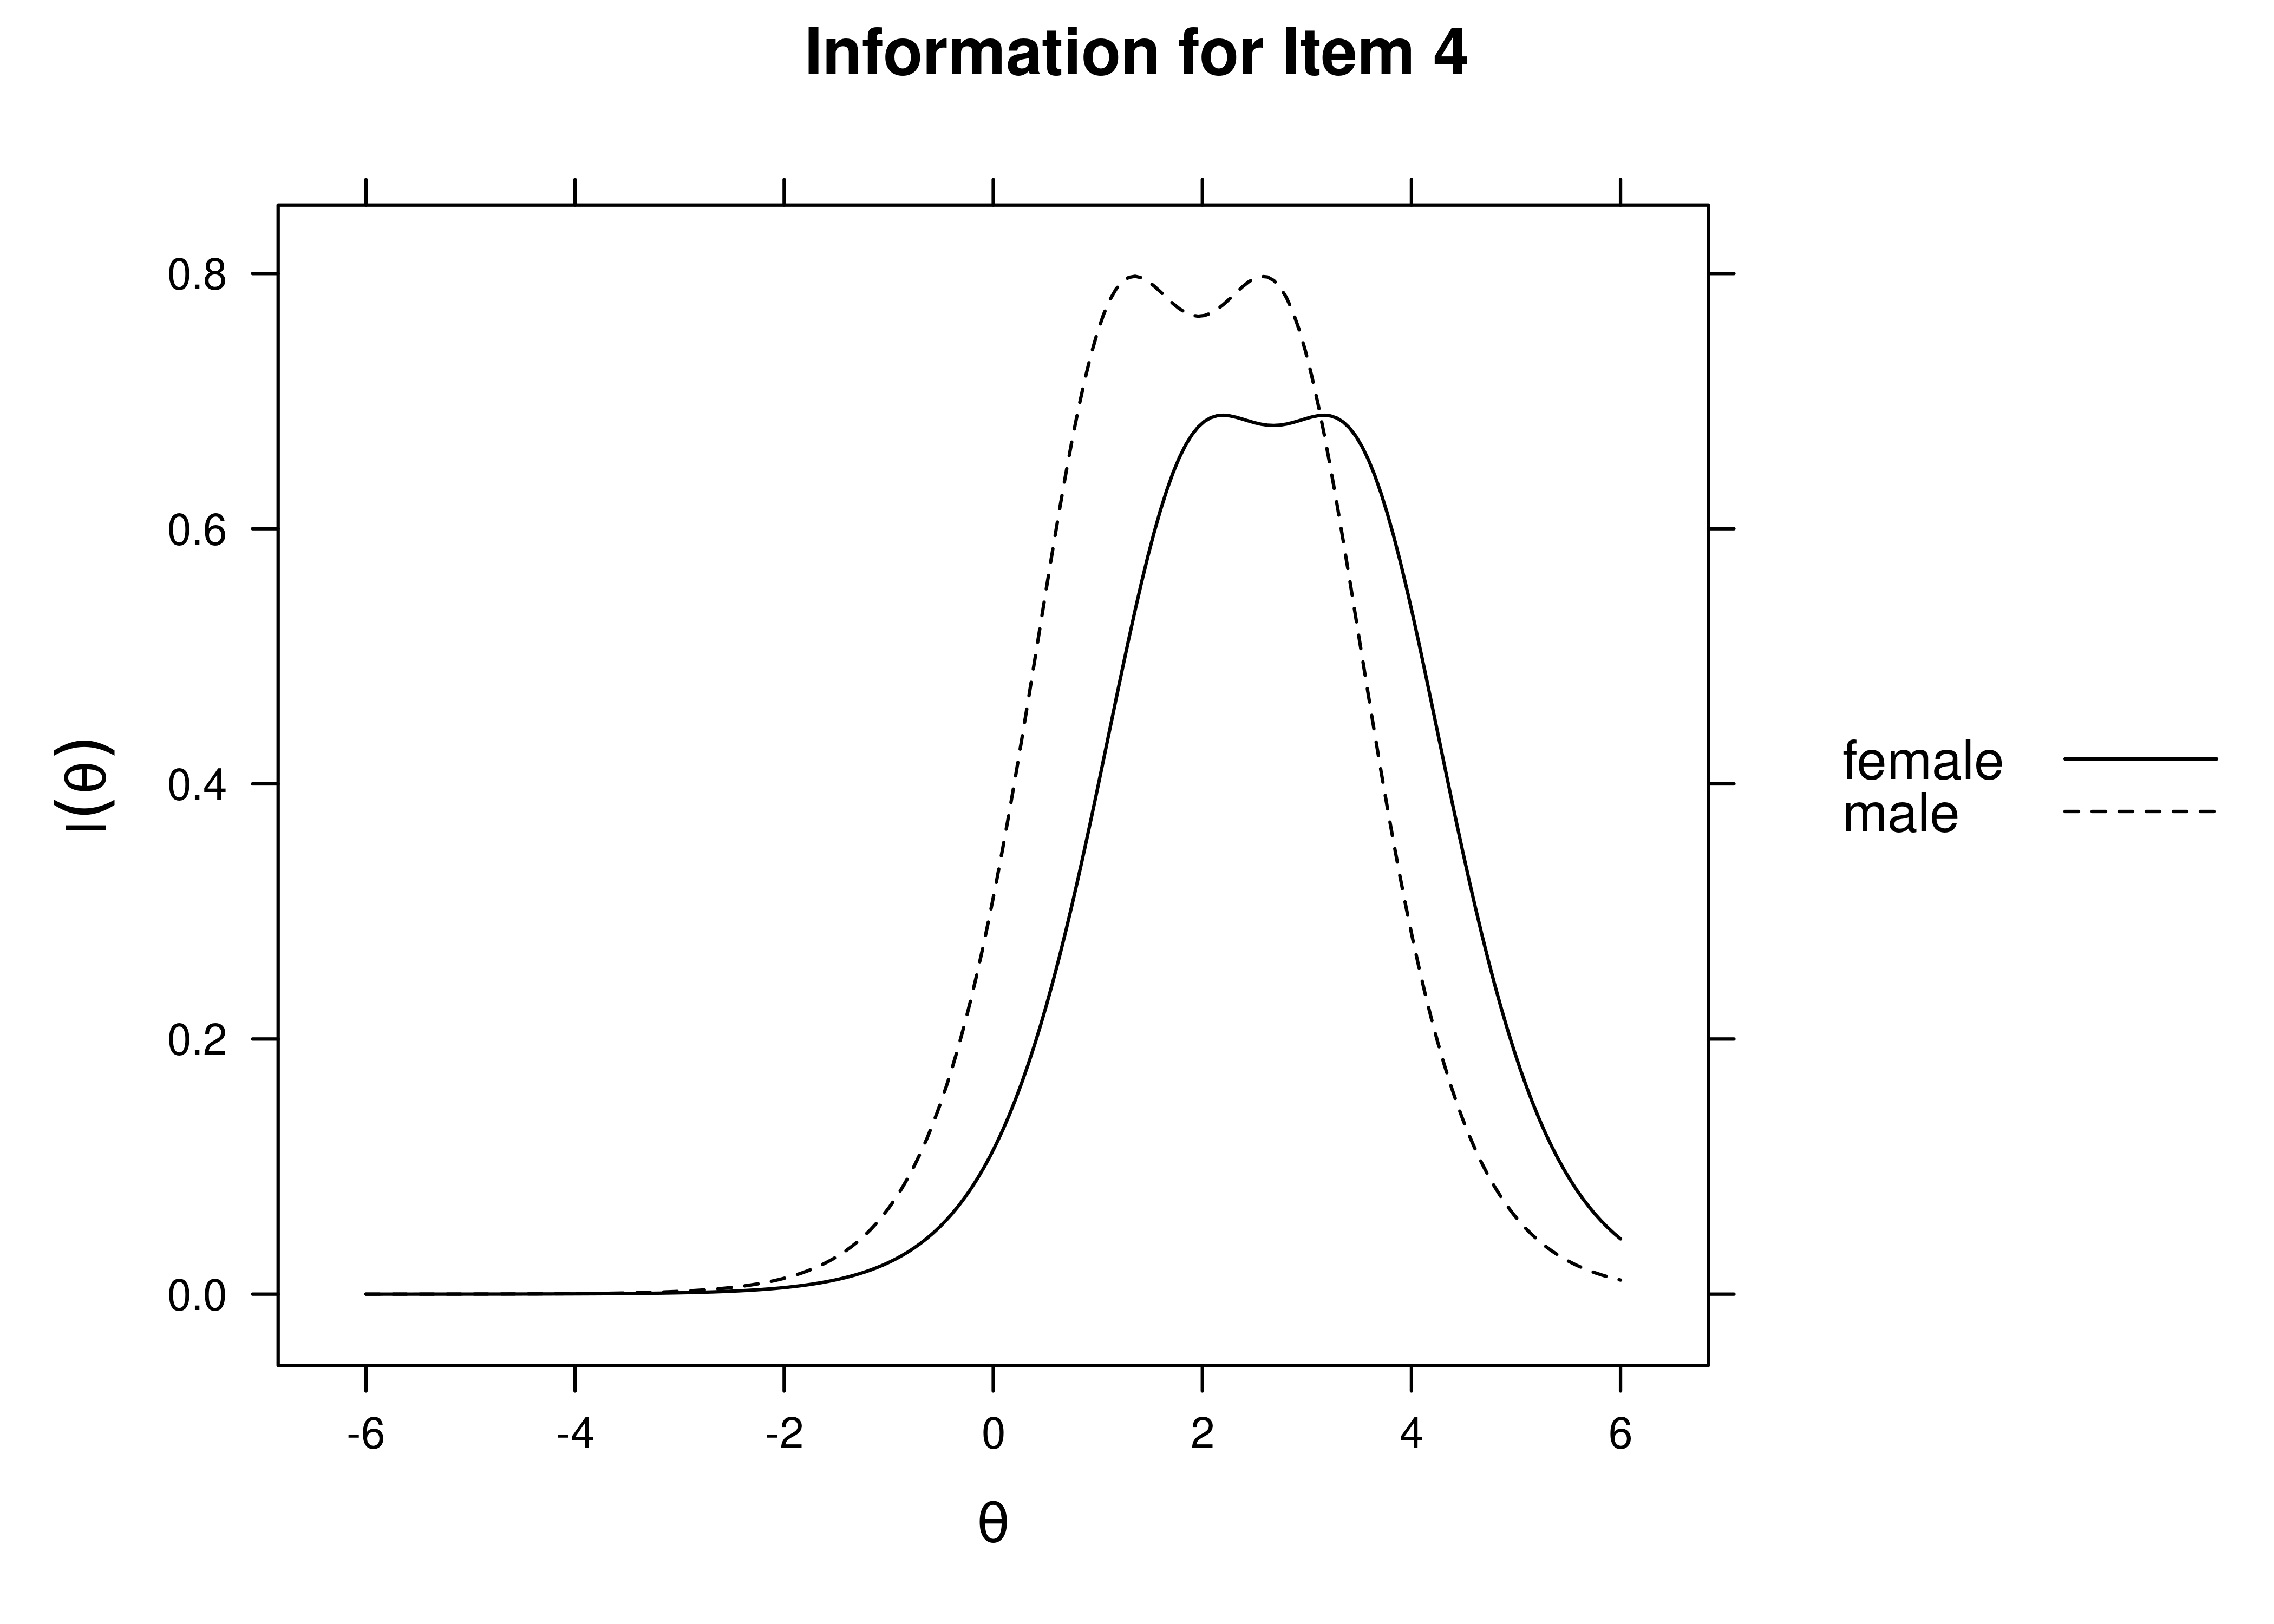 Item Information Curves by Sex: Item 4.